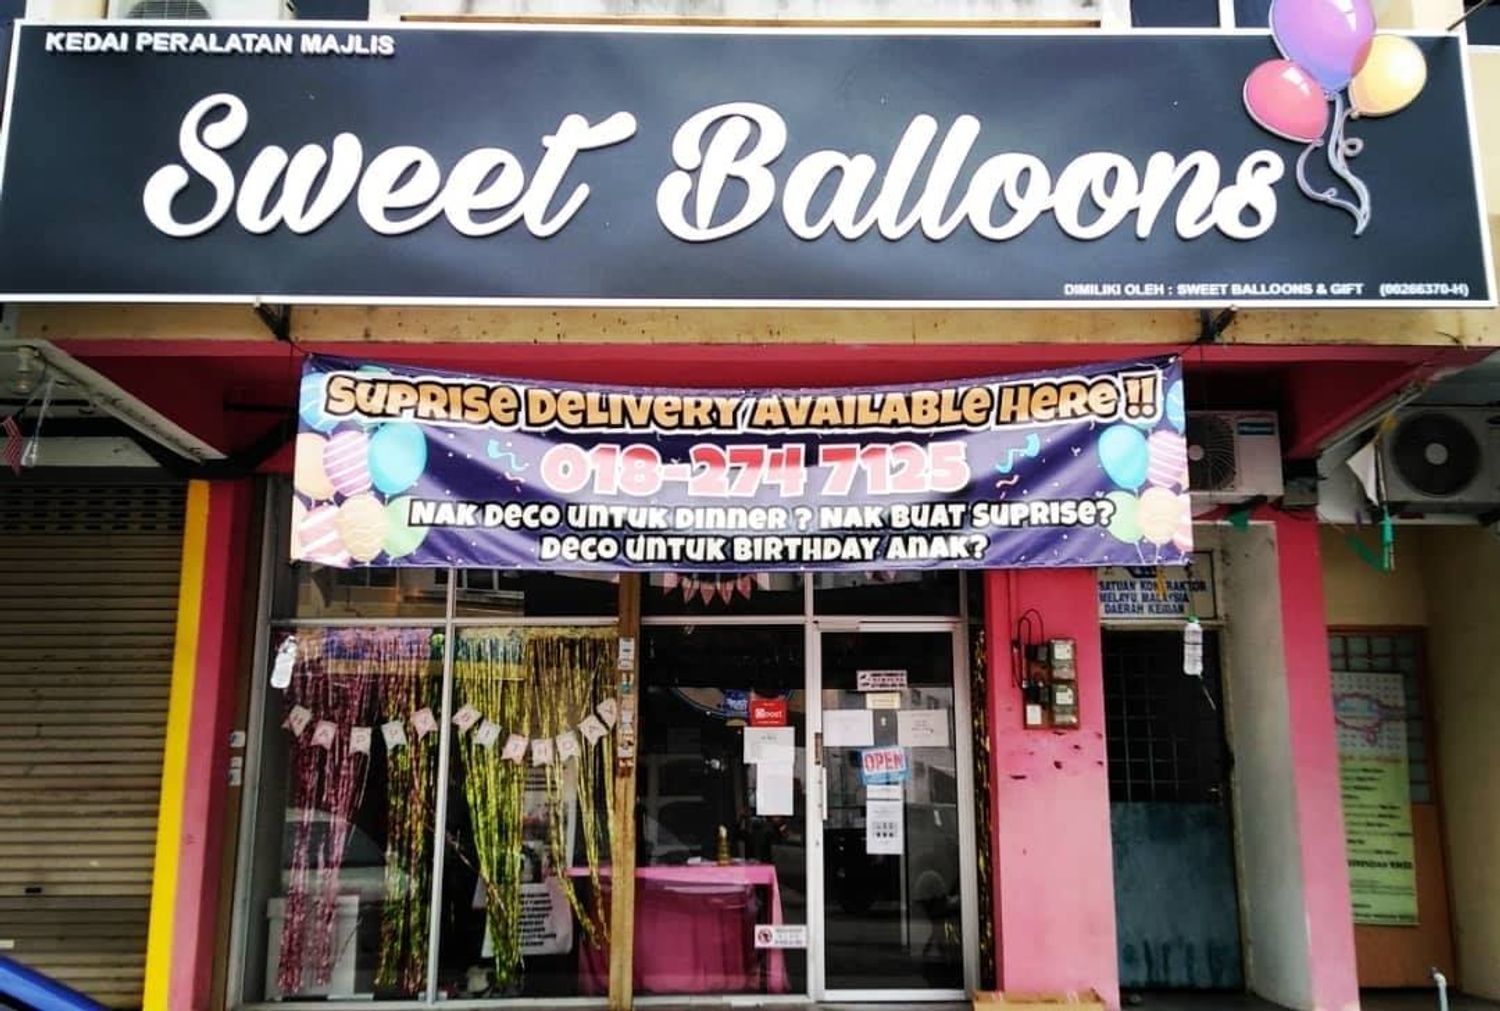 Sweet Balloons & Gift